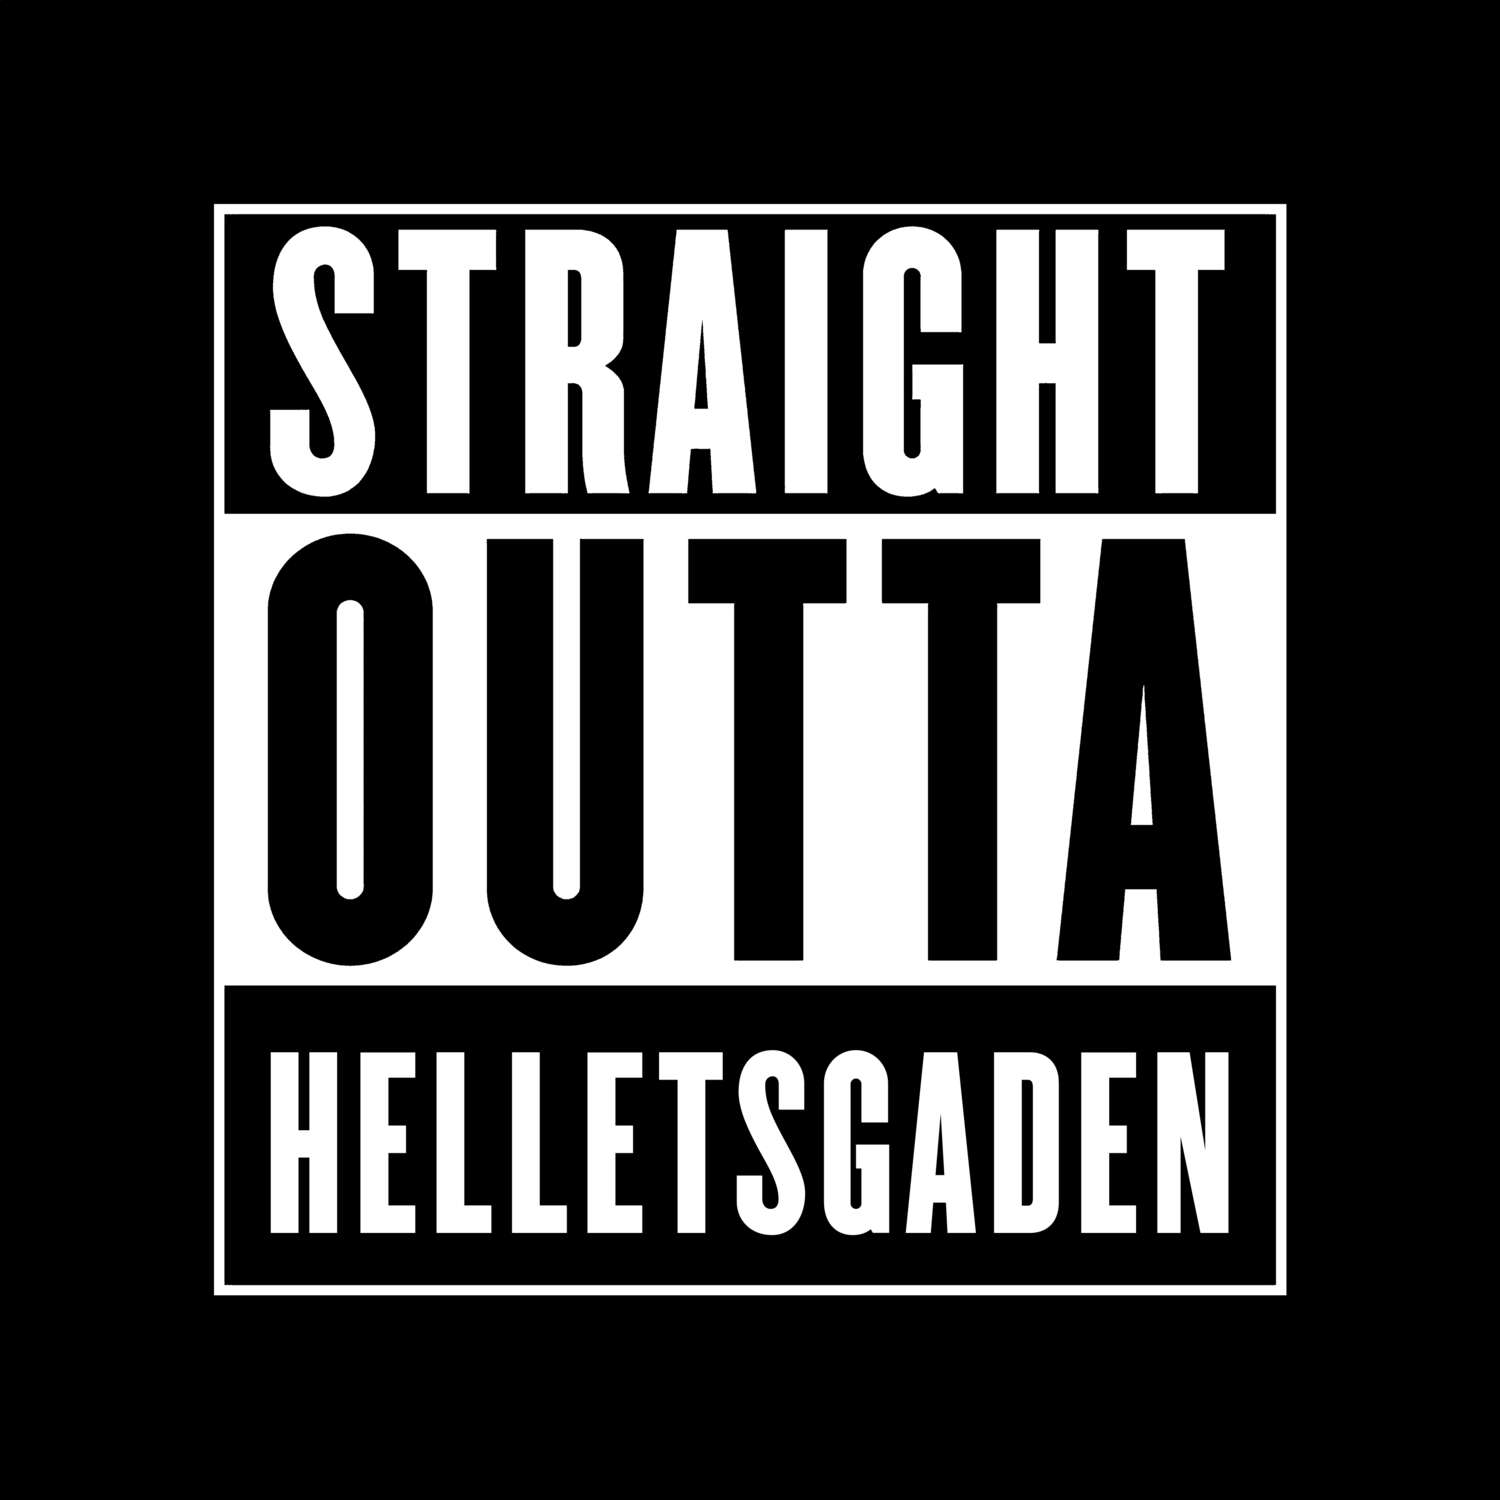 Helletsgaden T-Shirt »Straight Outta«